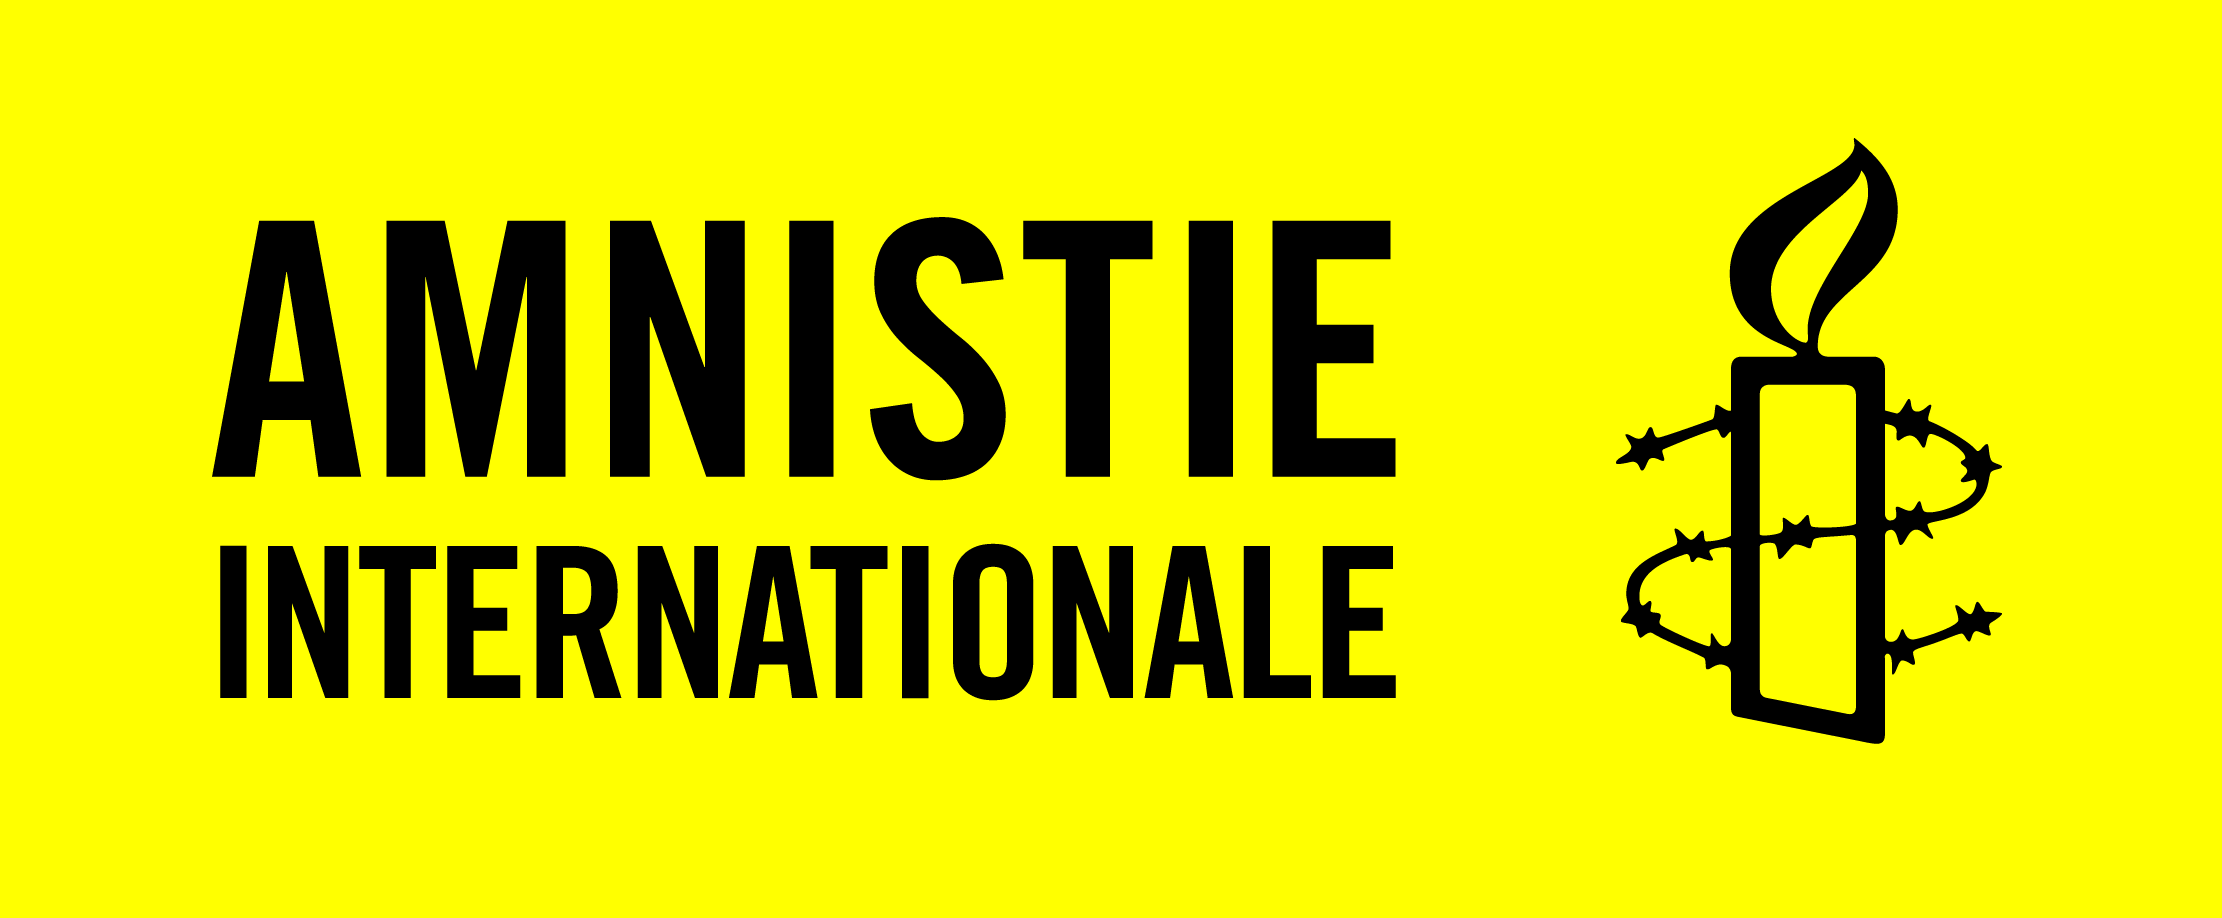 Amnistie internationale Canada francophone